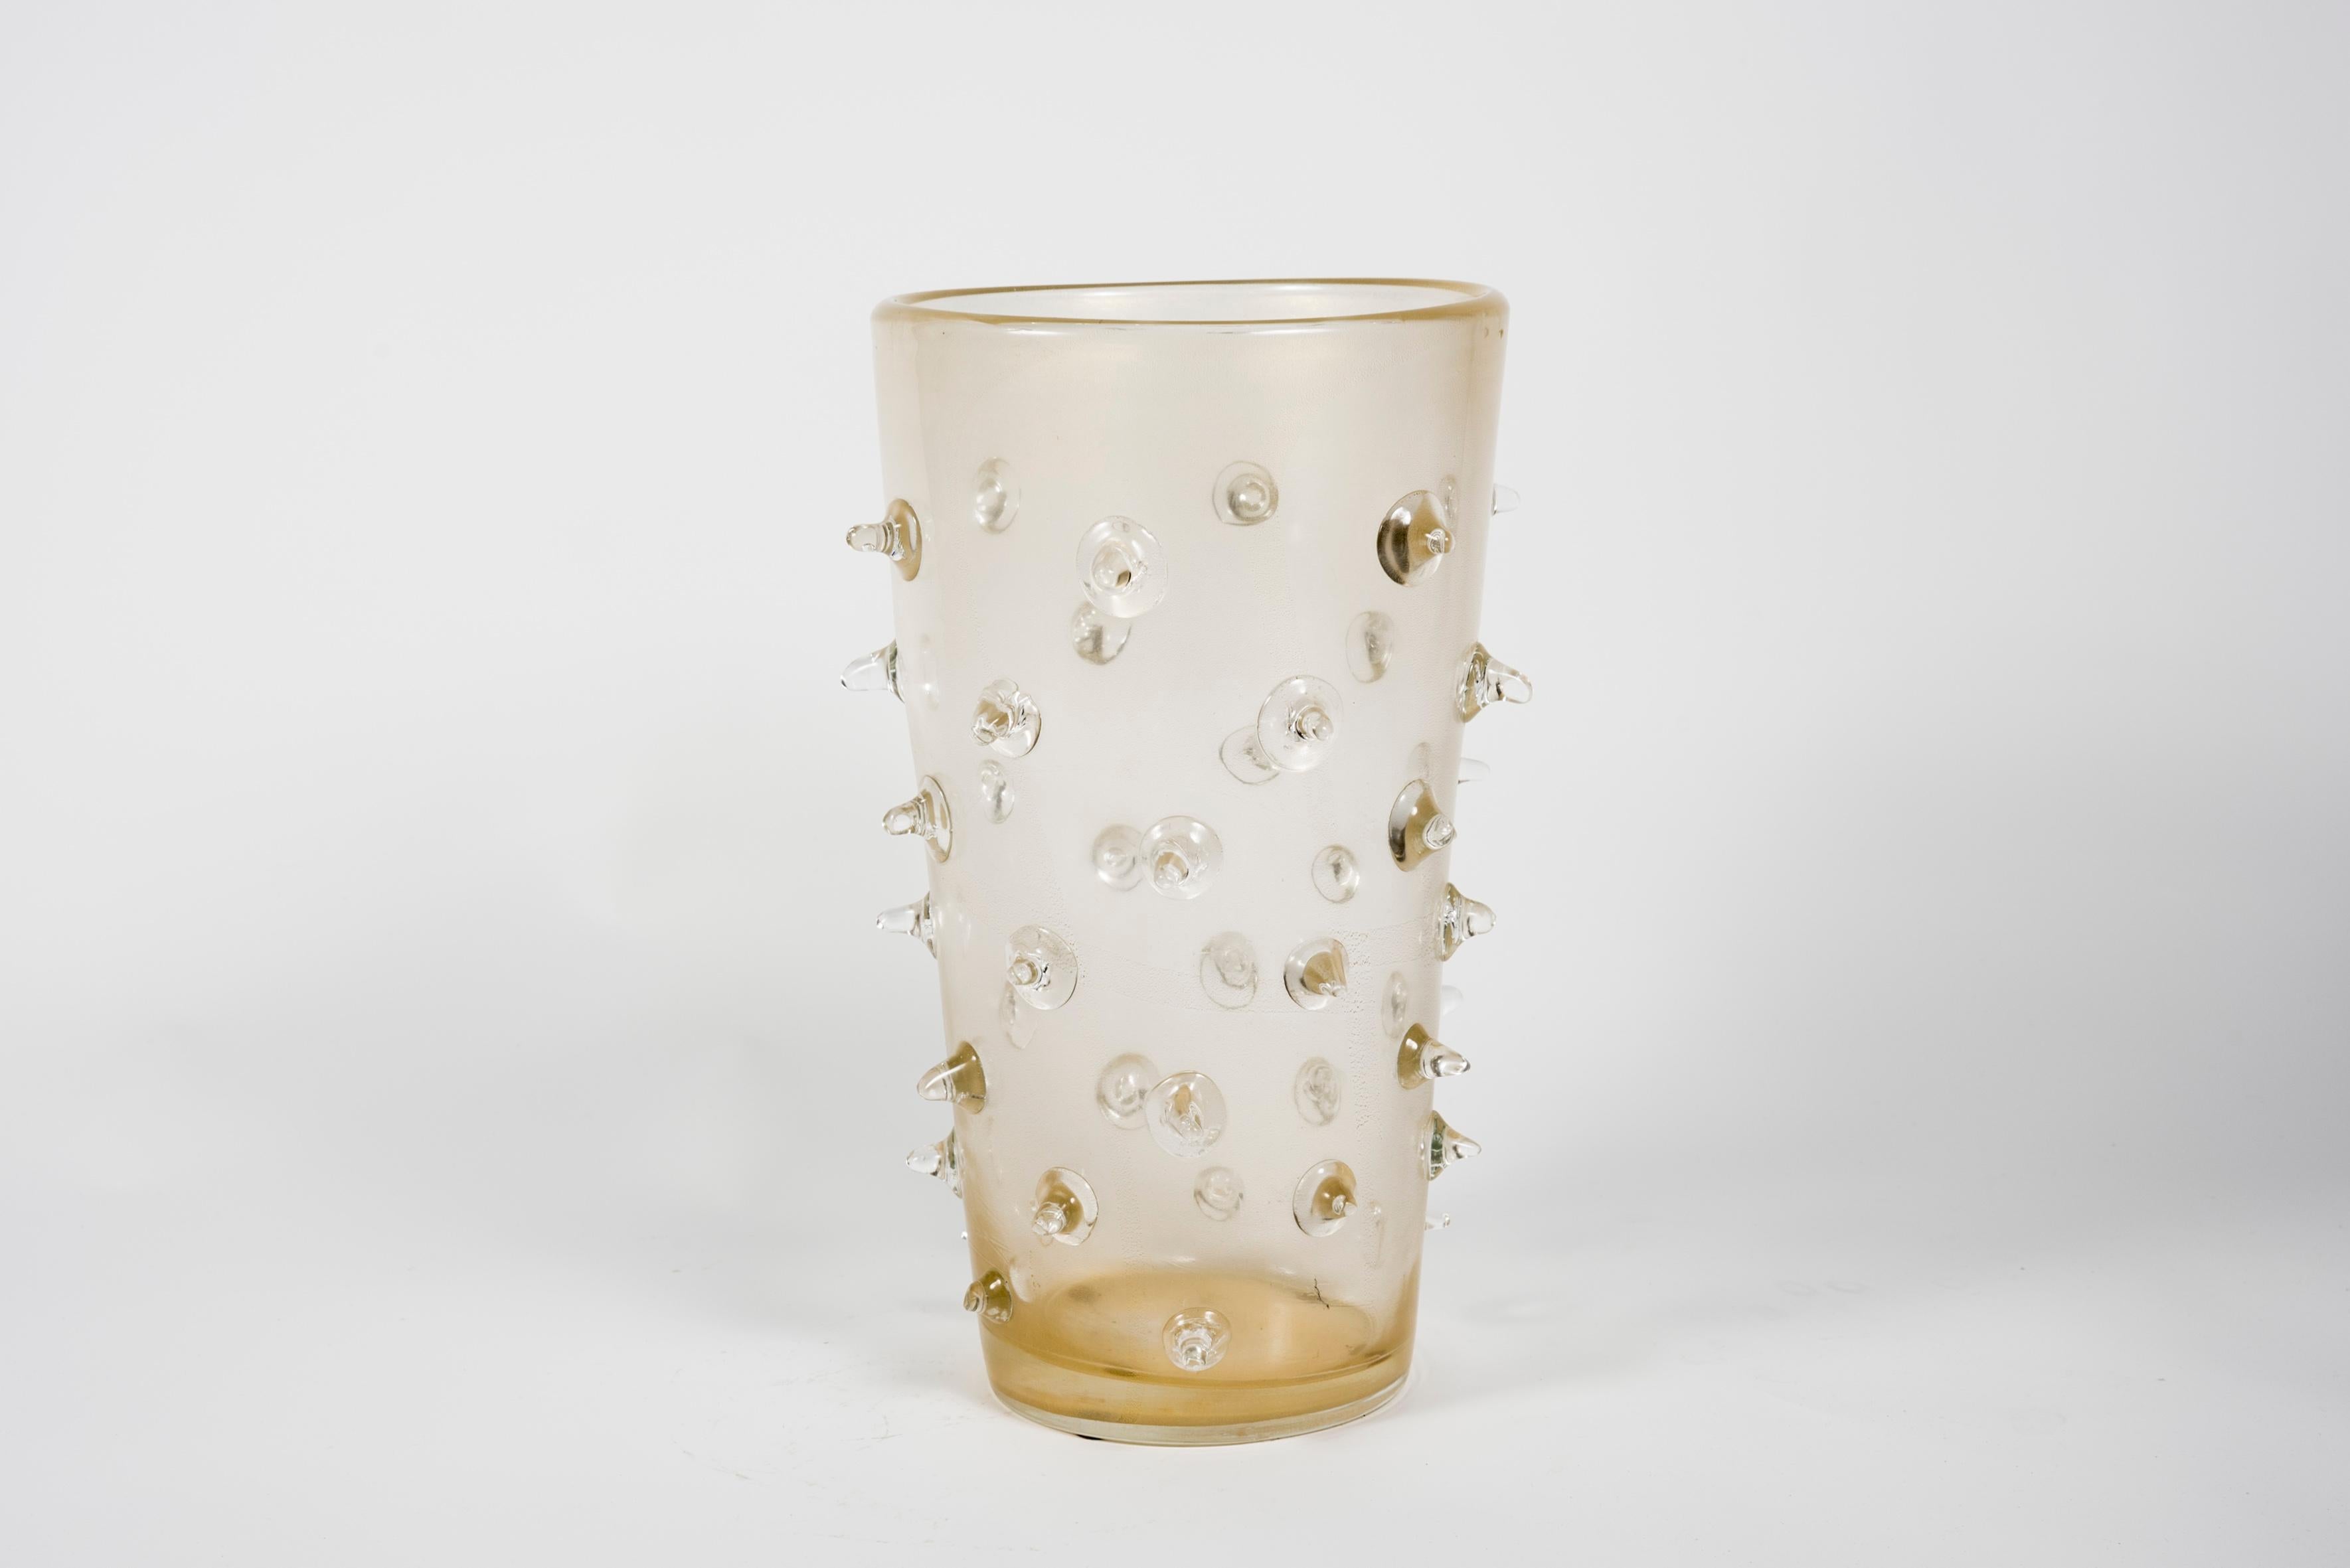 Very nice Murano glass vases.
Signed
 